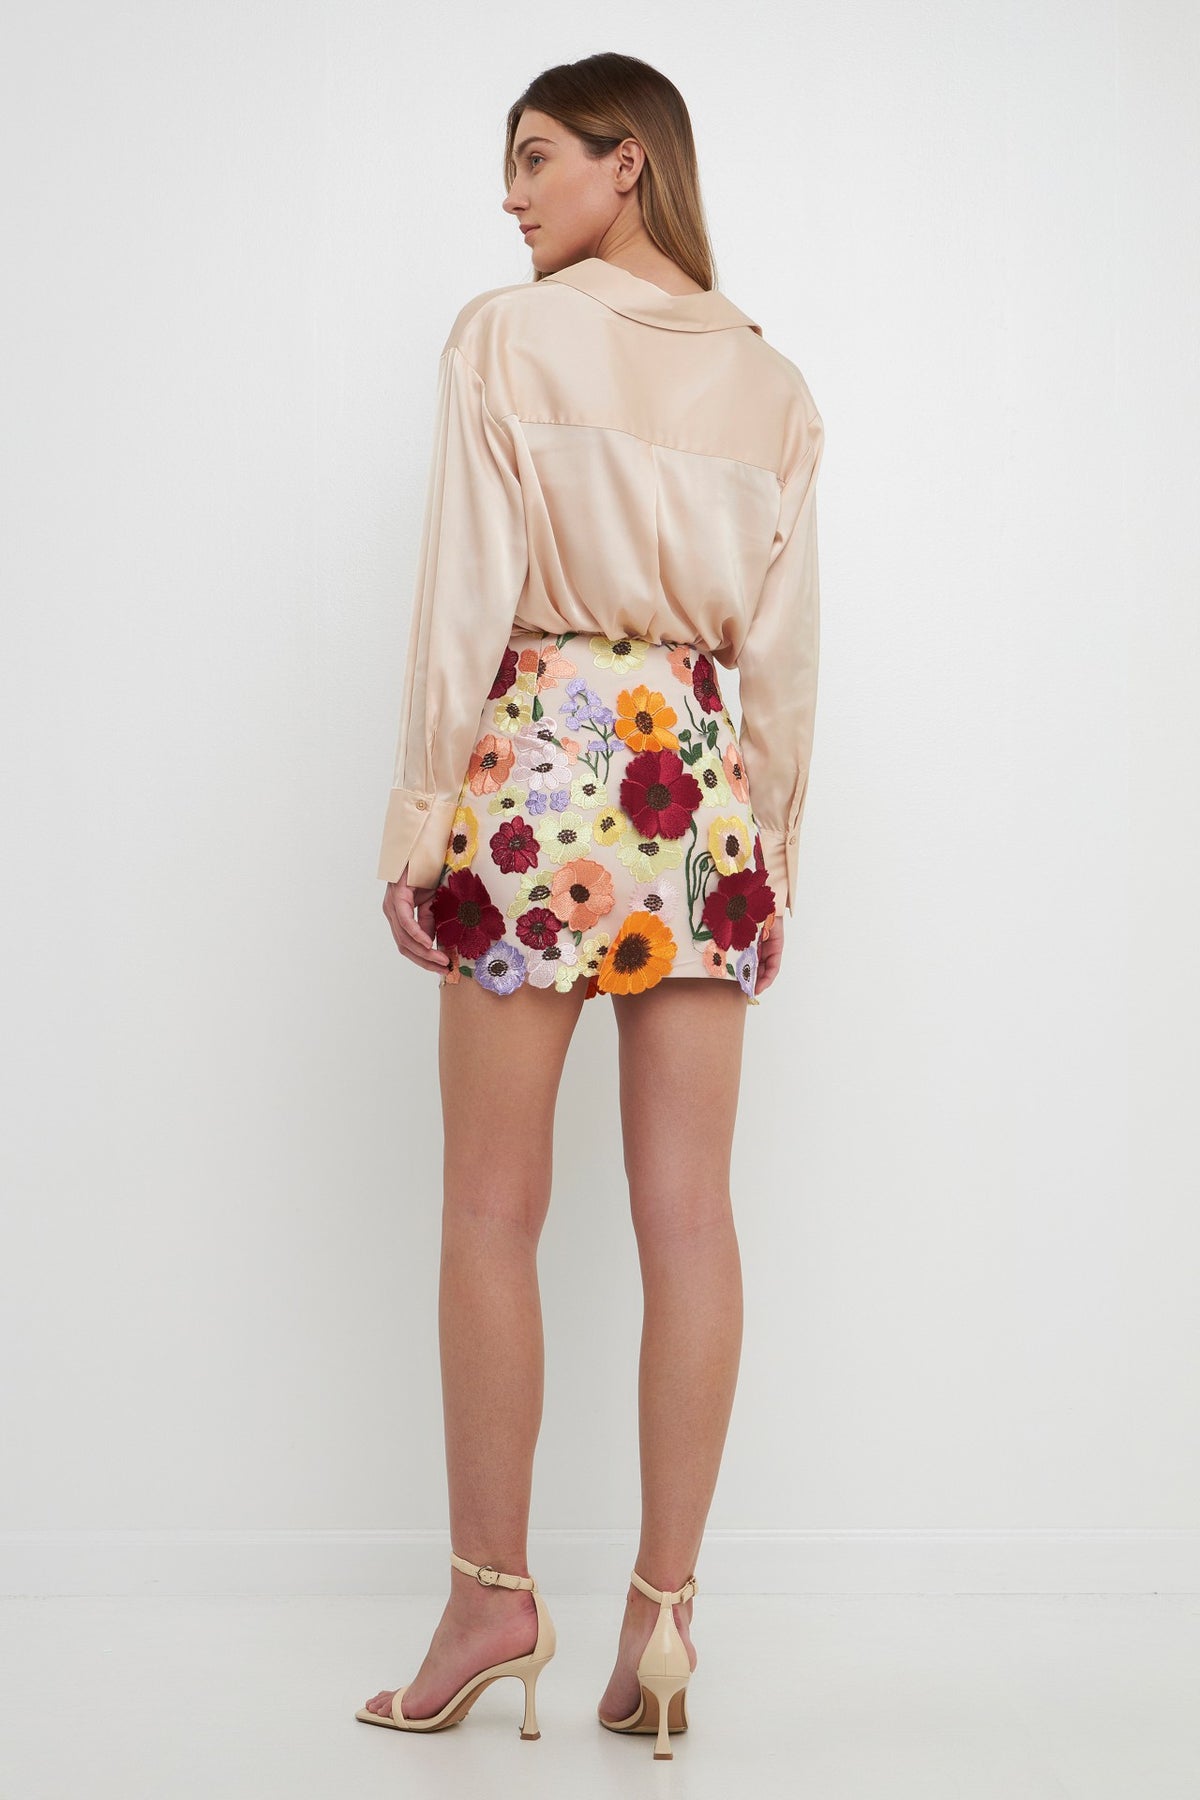 Flower Field Skirt